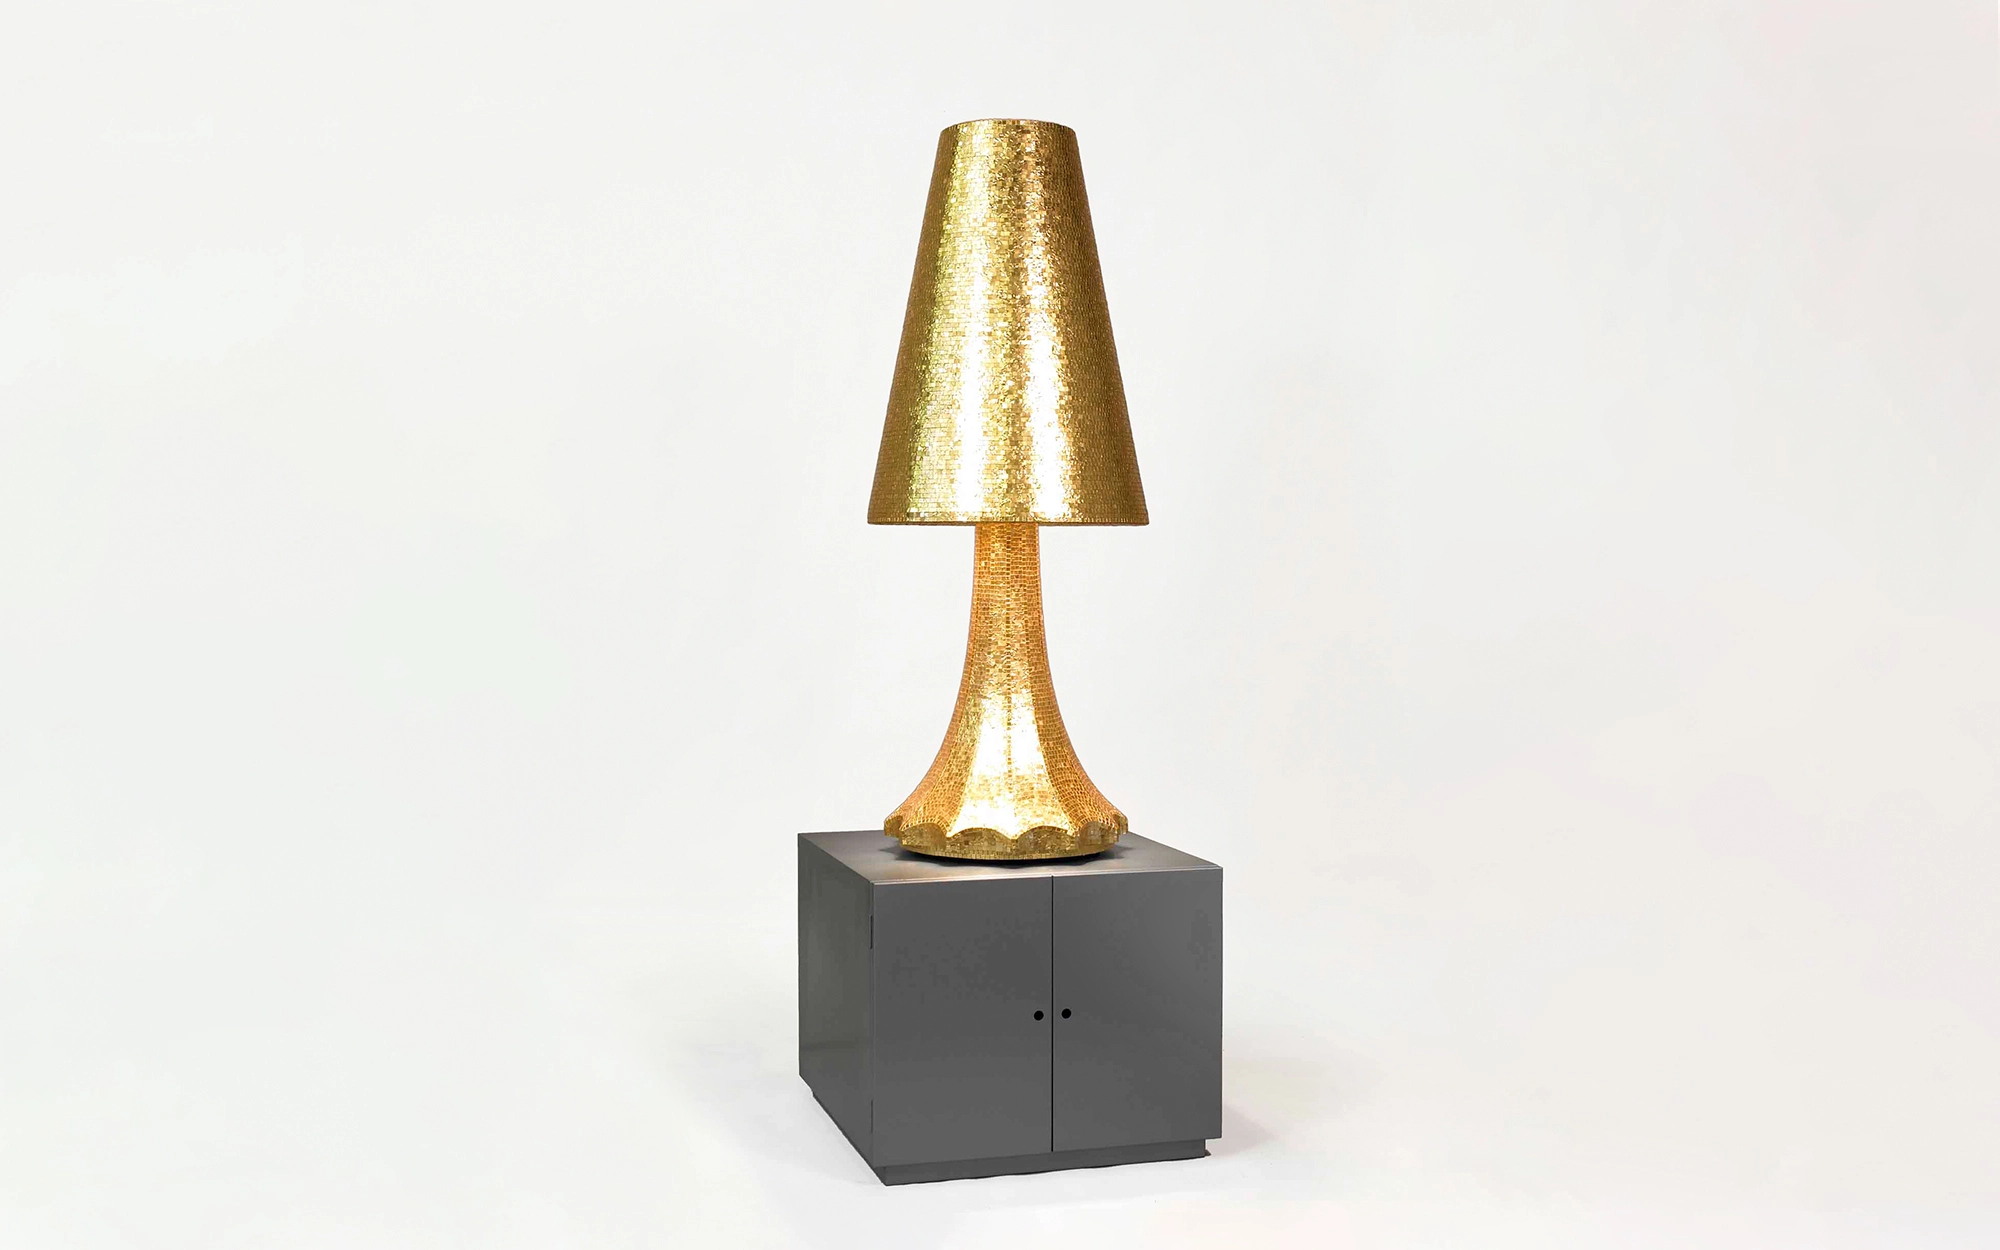 Lampada yellow gold - Alessandro Mendini - Sofa - Galerie kreo